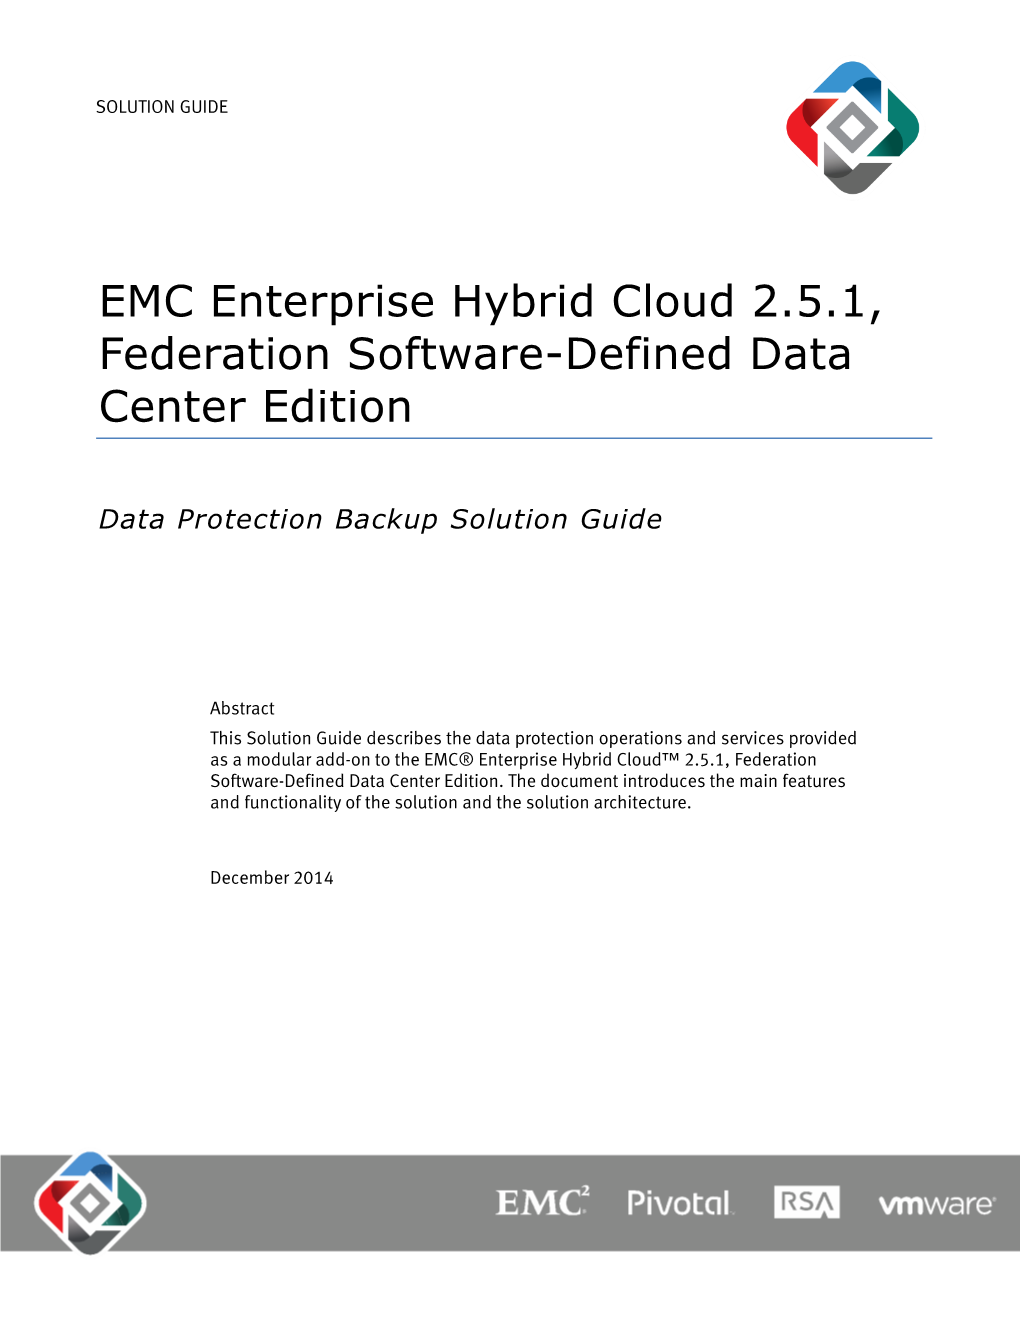 H13647: EMC EHC 2.5.1, Federation SDDC Edition Data Protection